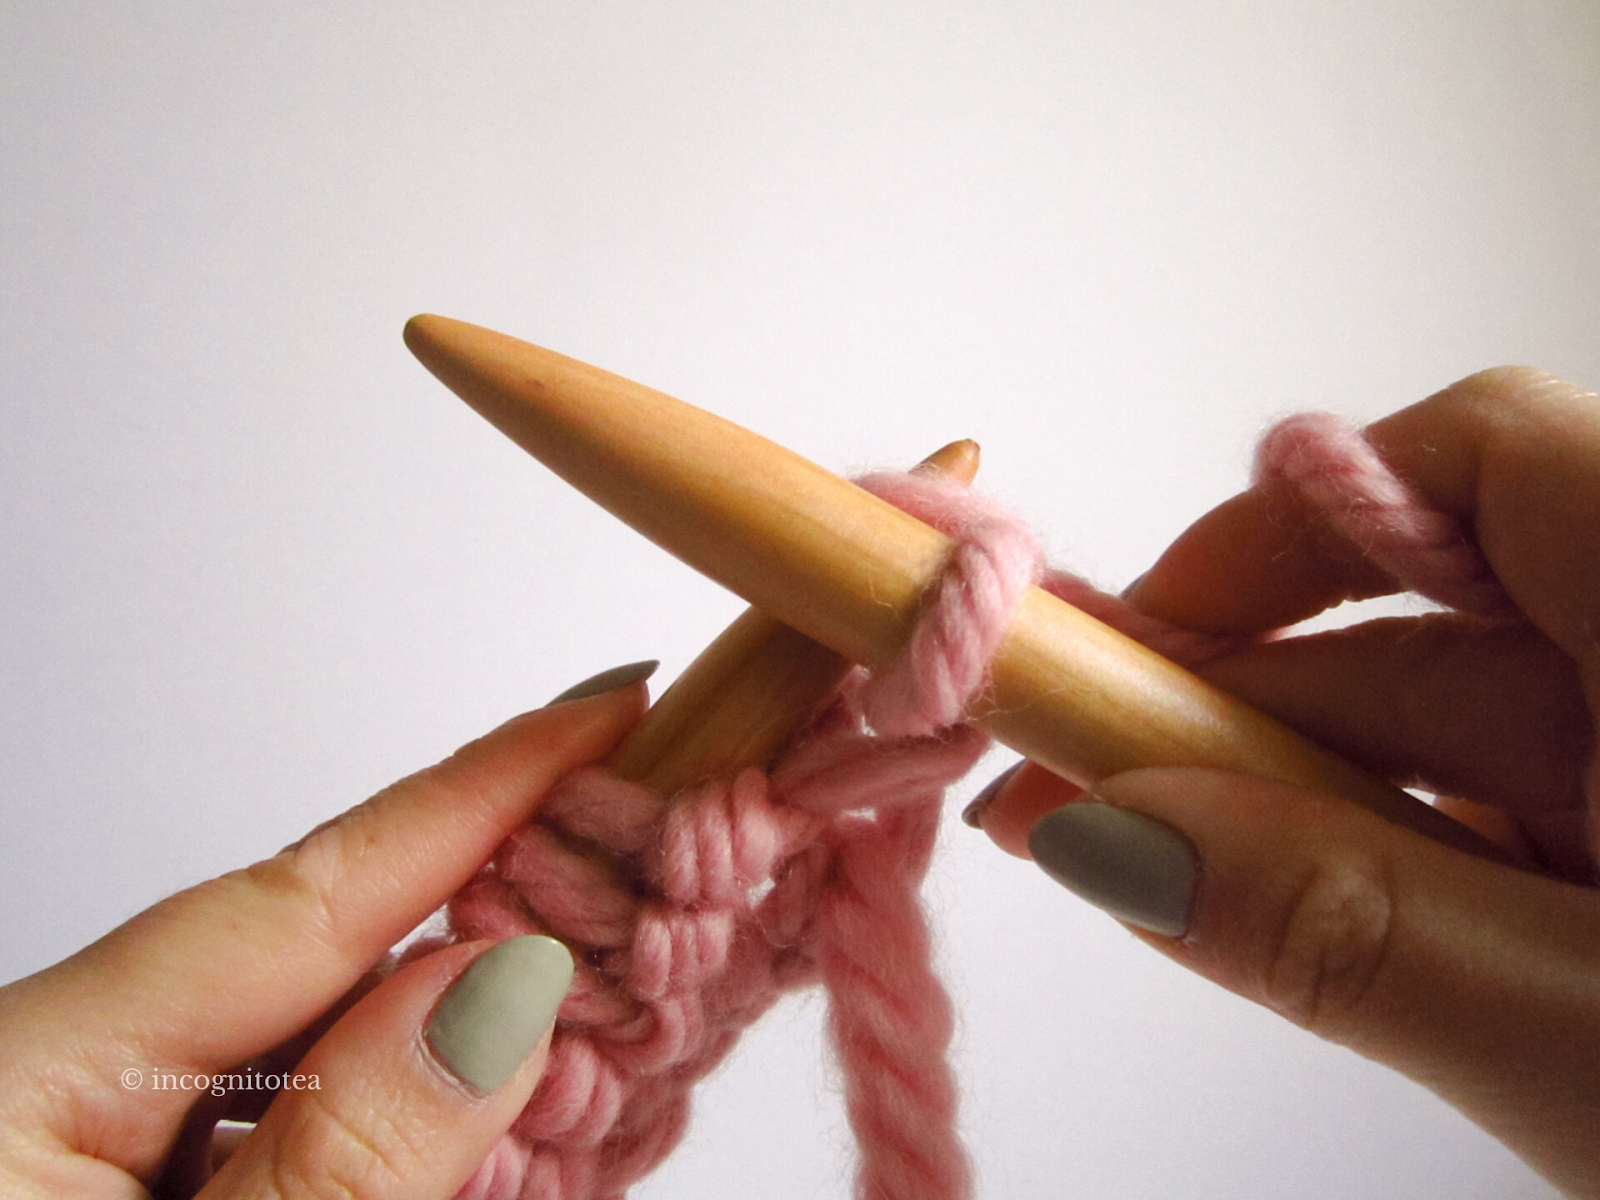 Knitting Basics | How to knit a stitch